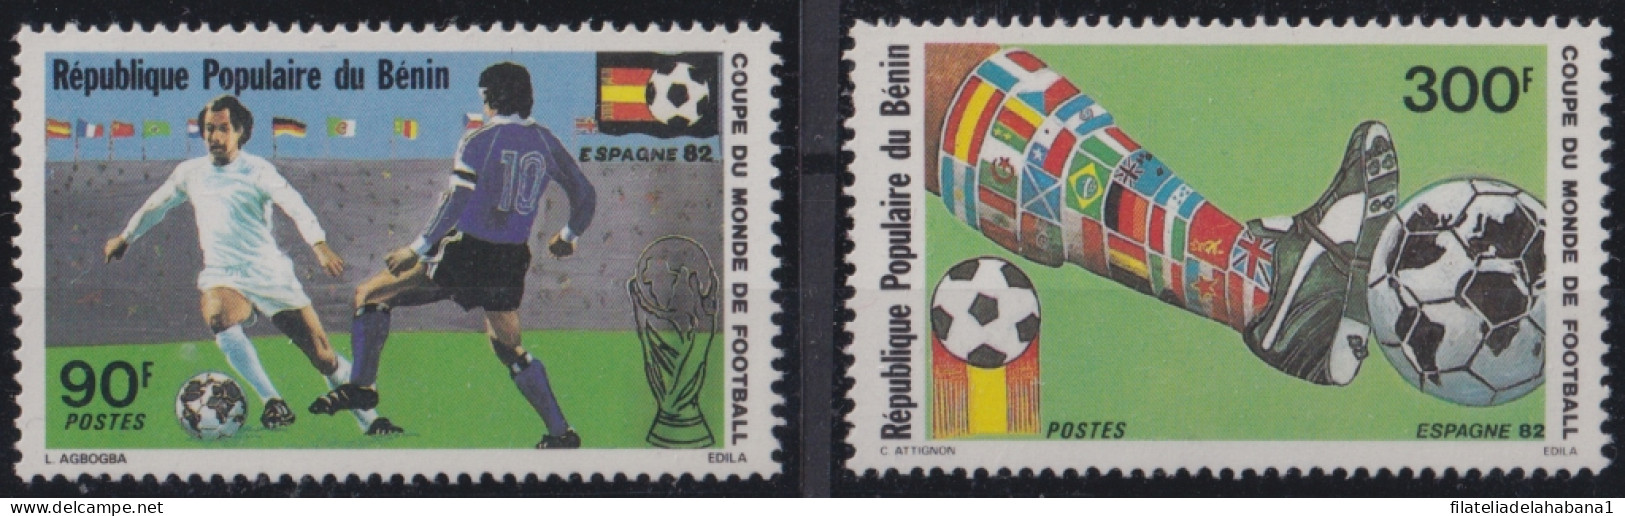 F-EX48950 BENIN MNH 1982 WORLD CHAMPIONSHIP SOCCER FOOTBALL.  - 1982 – Spain